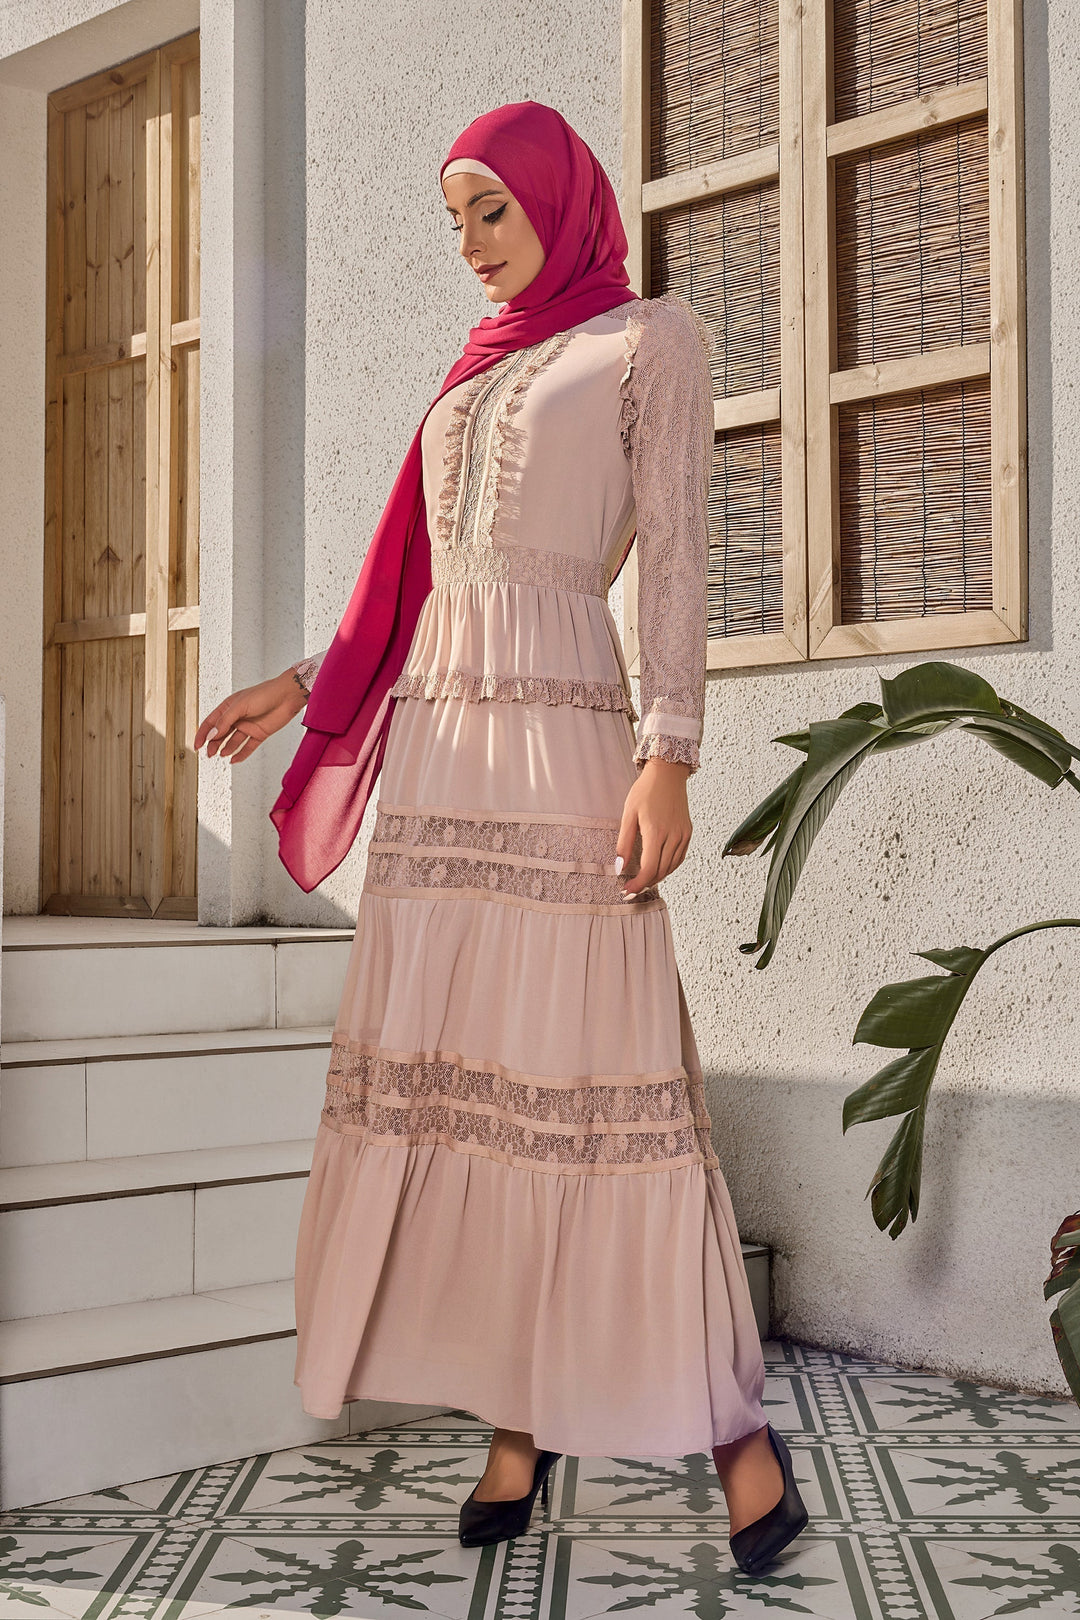 a woman wearing a pink dress and a hijab